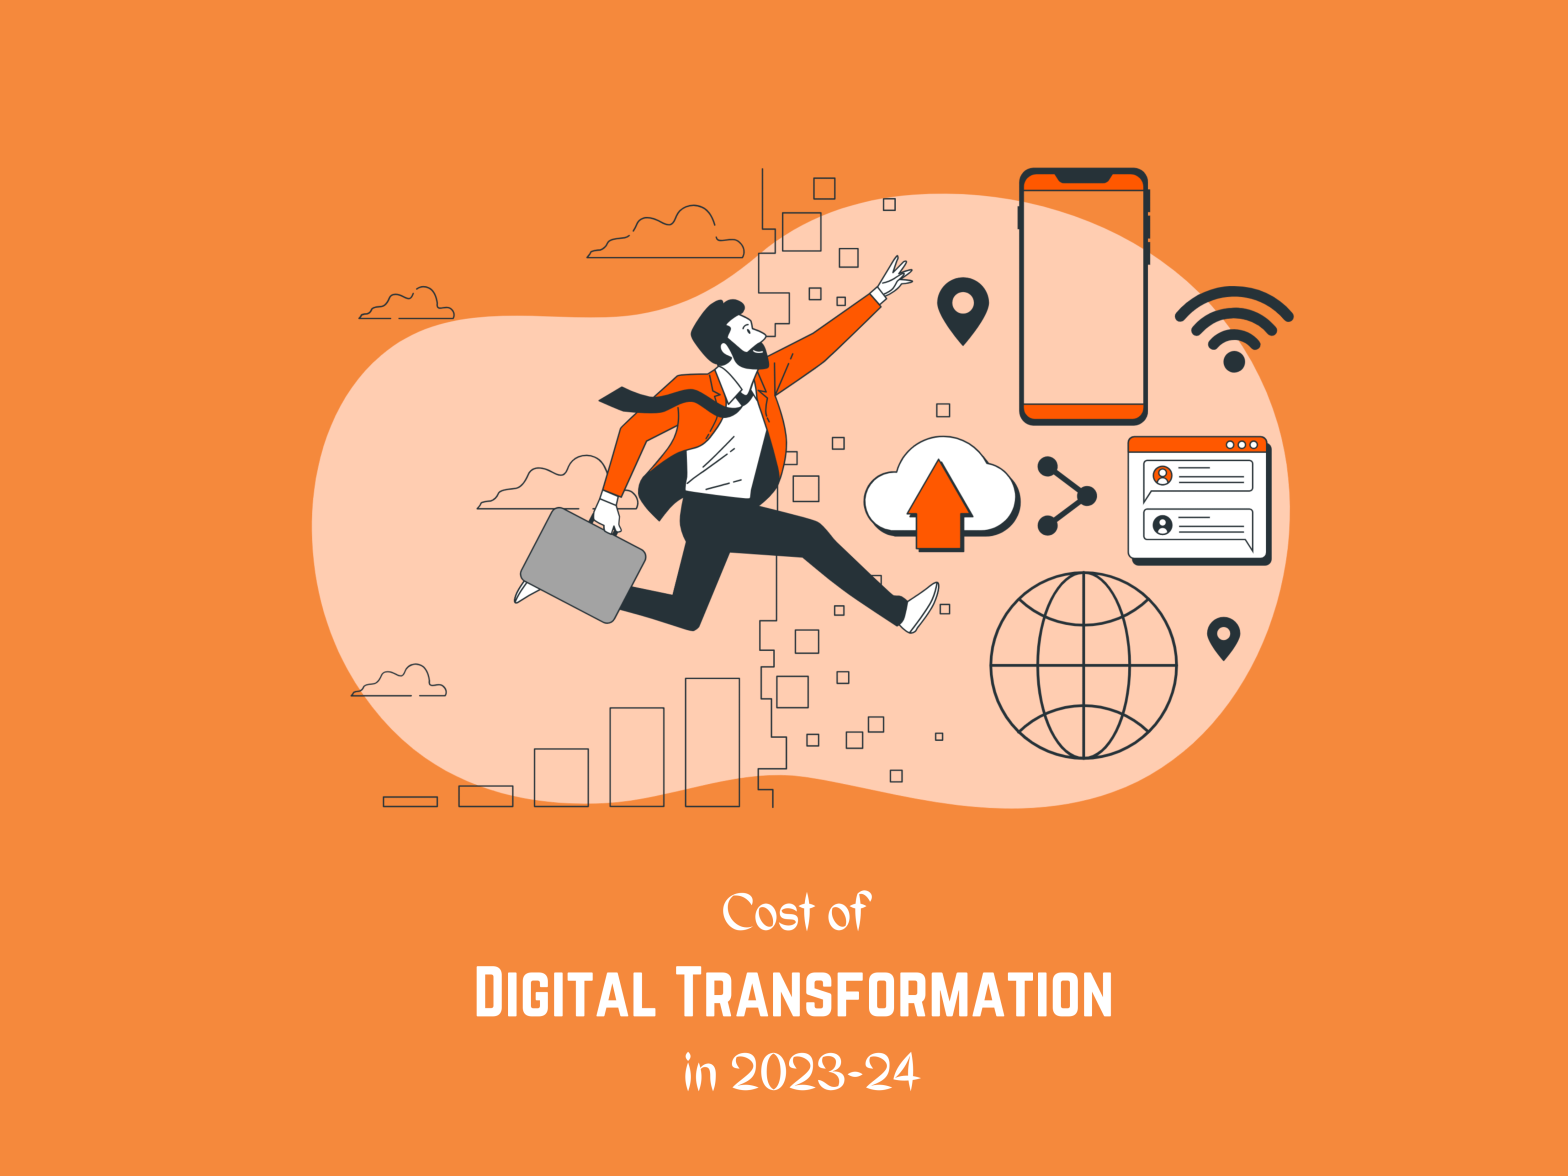 Cost of Digital Transformation in 2023-24